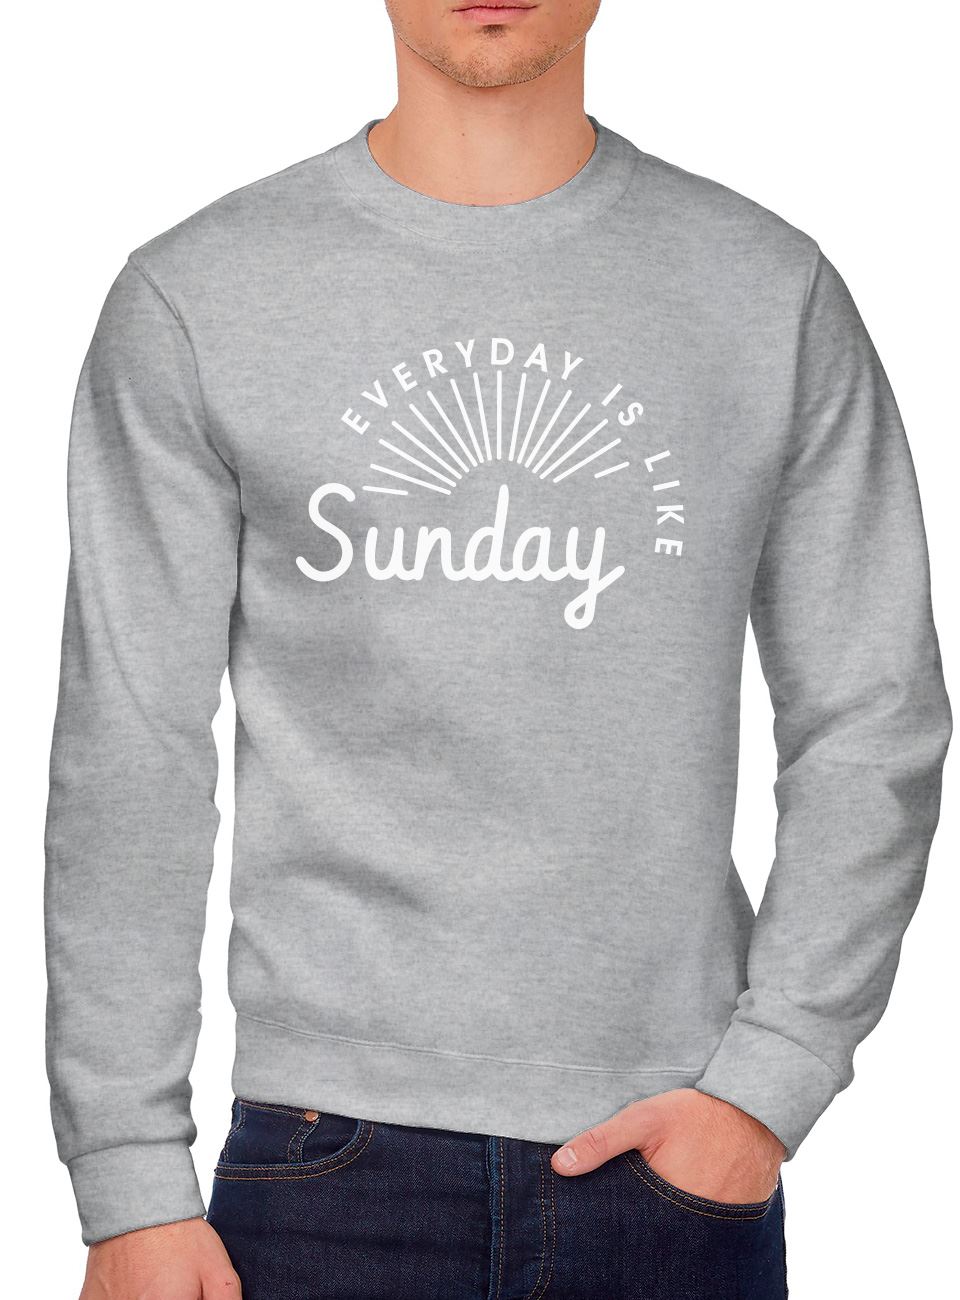 Everyday Is Like Sunday - Youth & Mens Sweatshirt